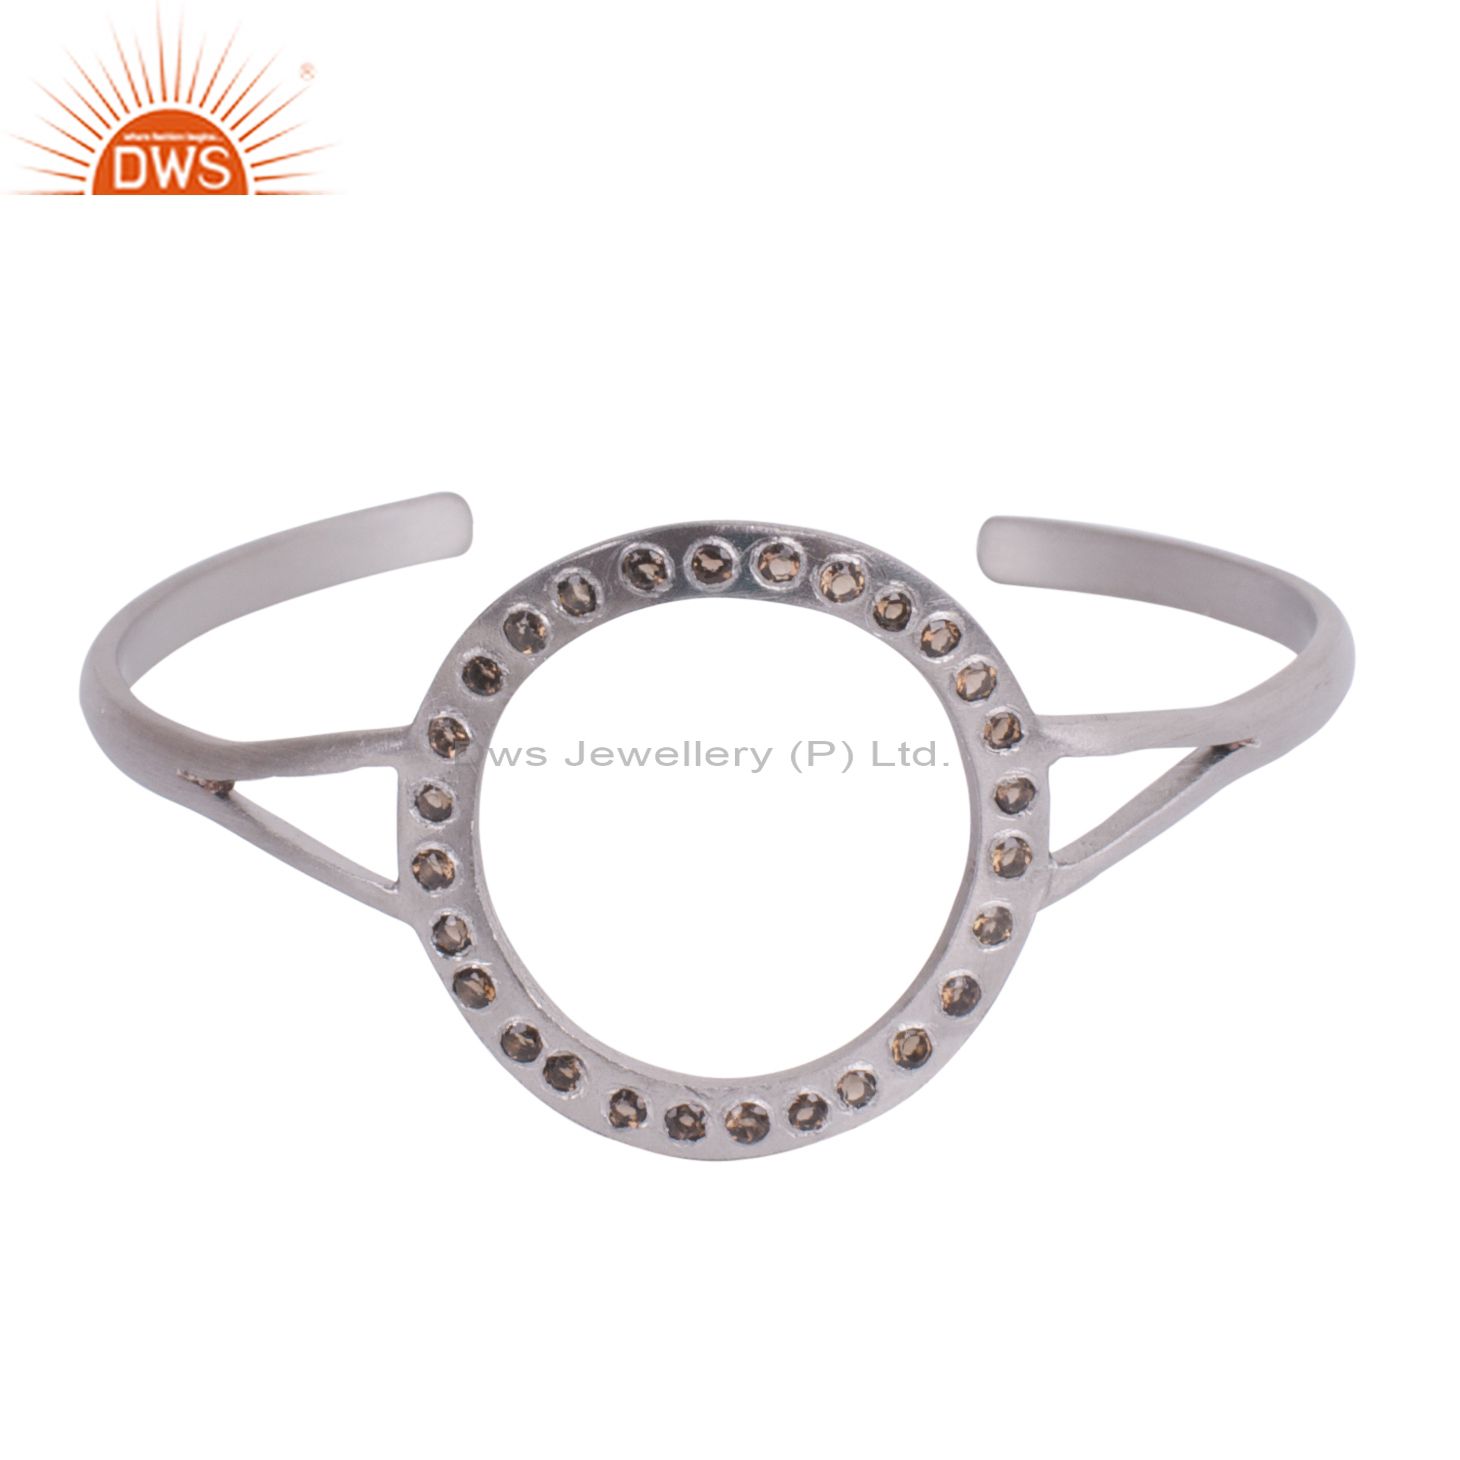 Handmade oxidized sterling silver smoky quartz gemstone fashion cuff bracelet